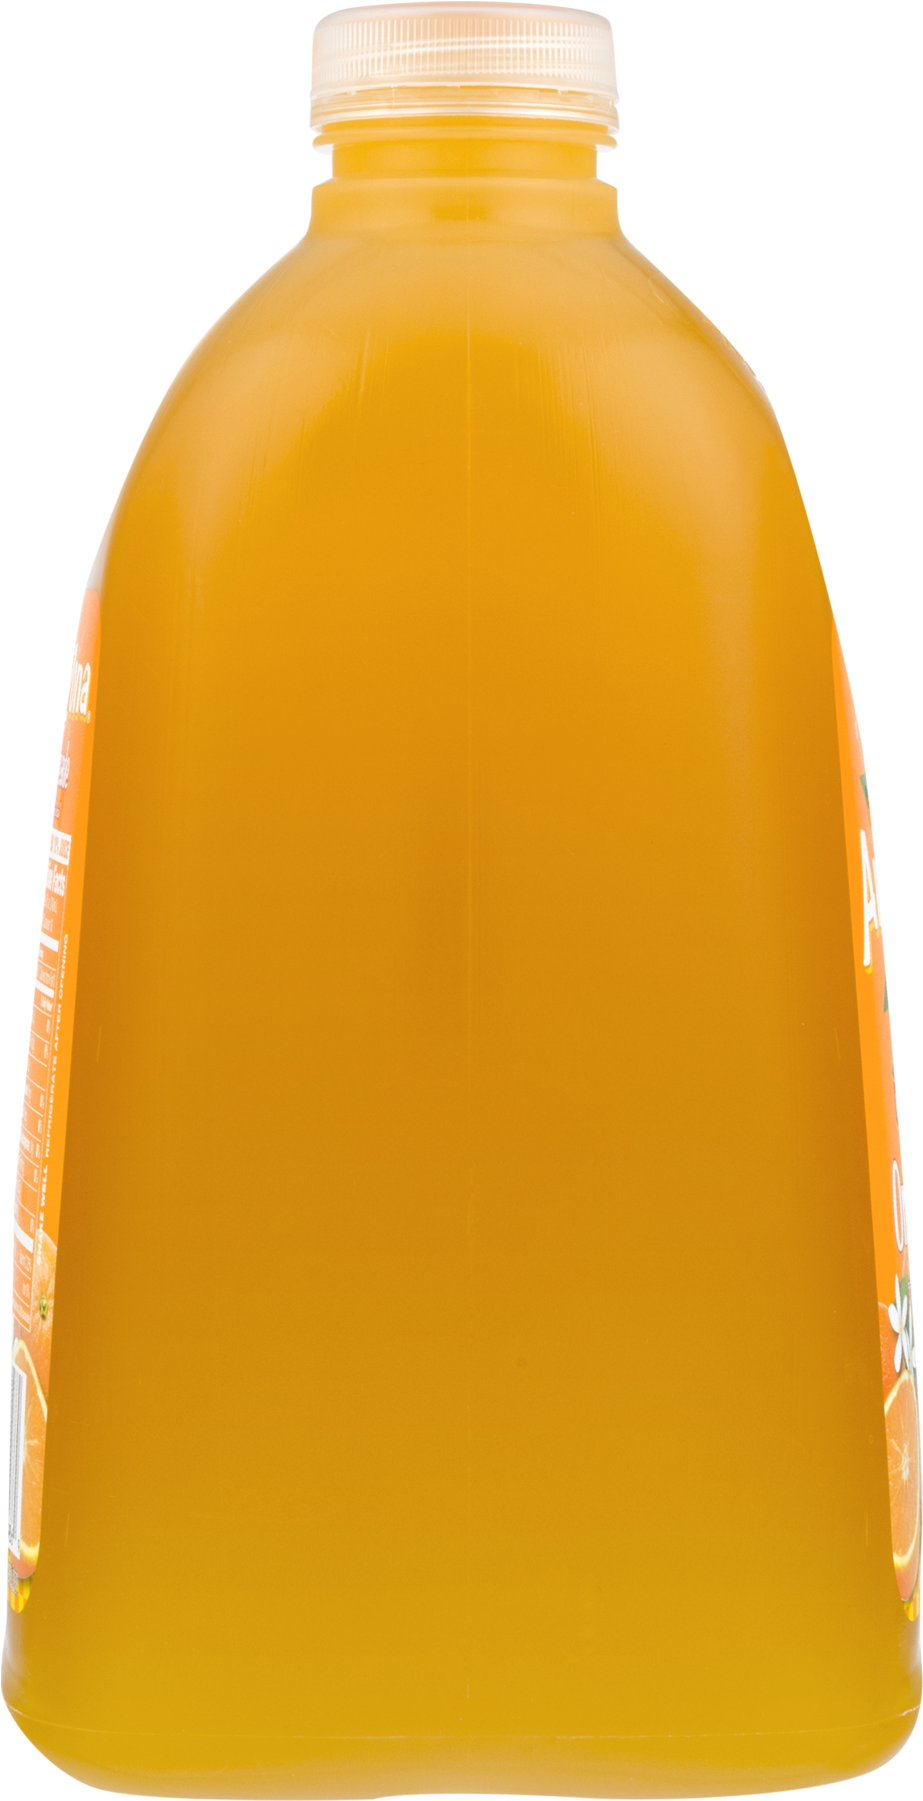 Plastic Bottle (1800x1800)